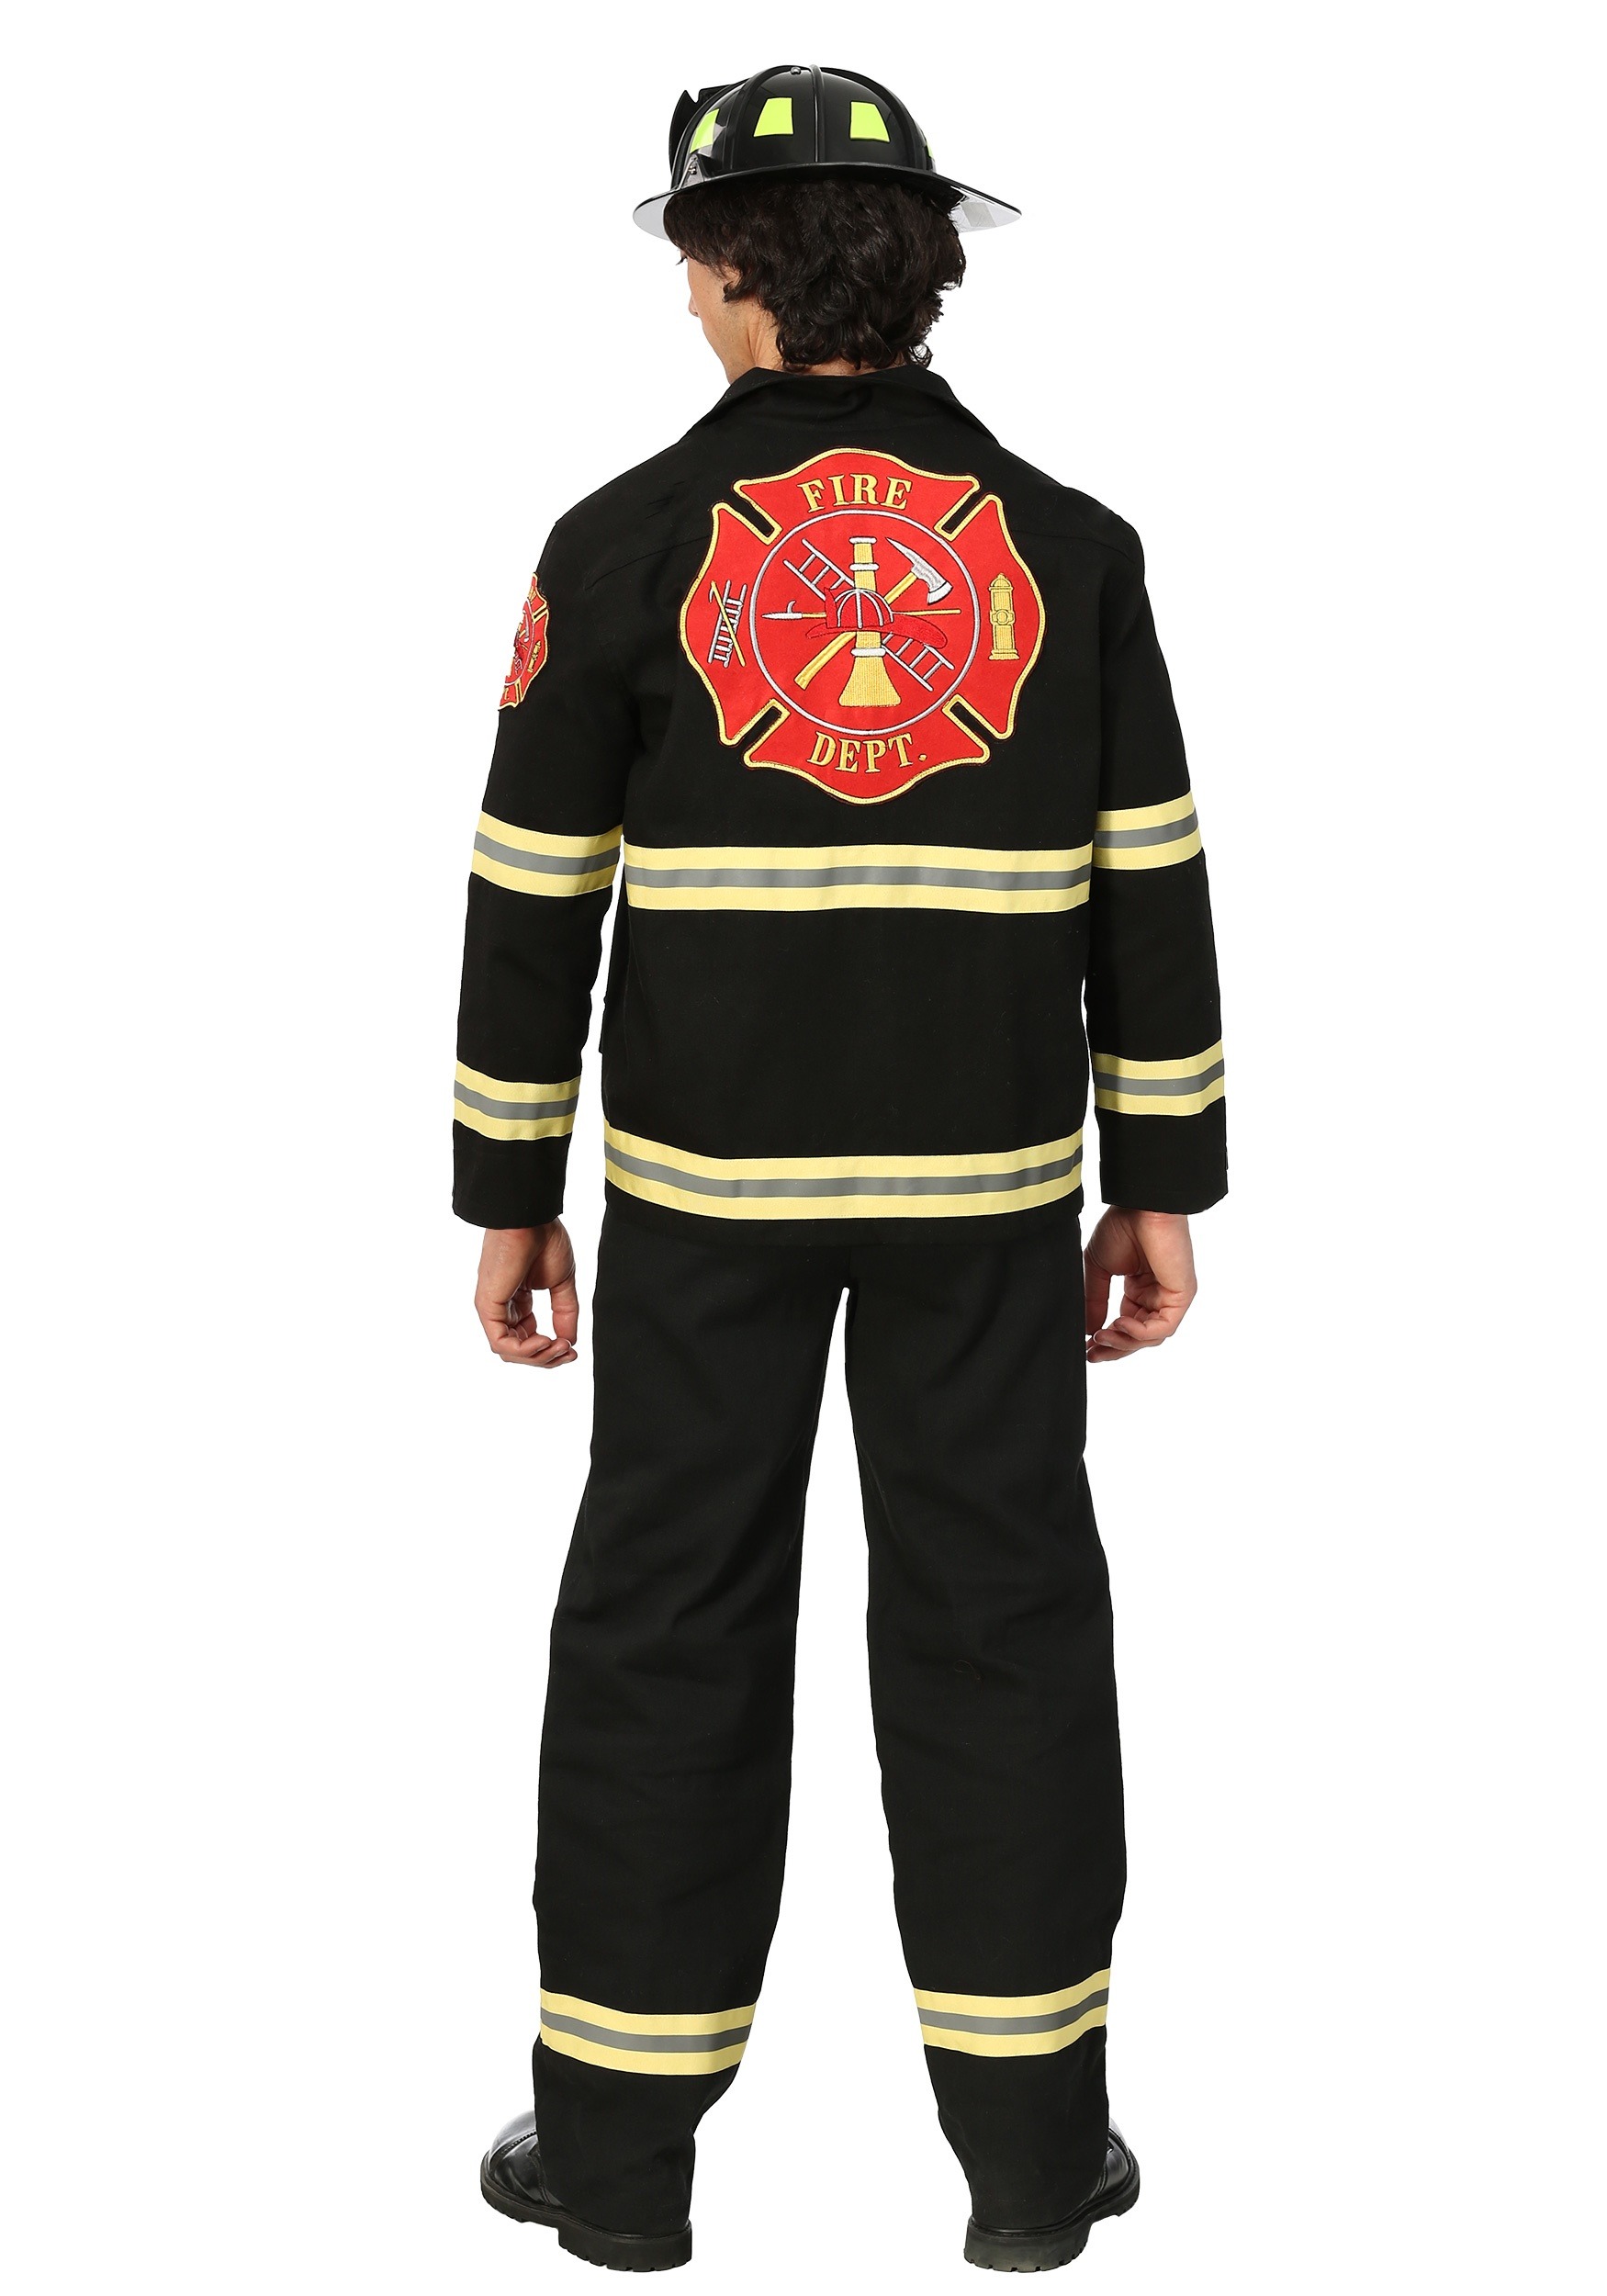 Black Uniform Firefighter Adult Fancy Dress Costume